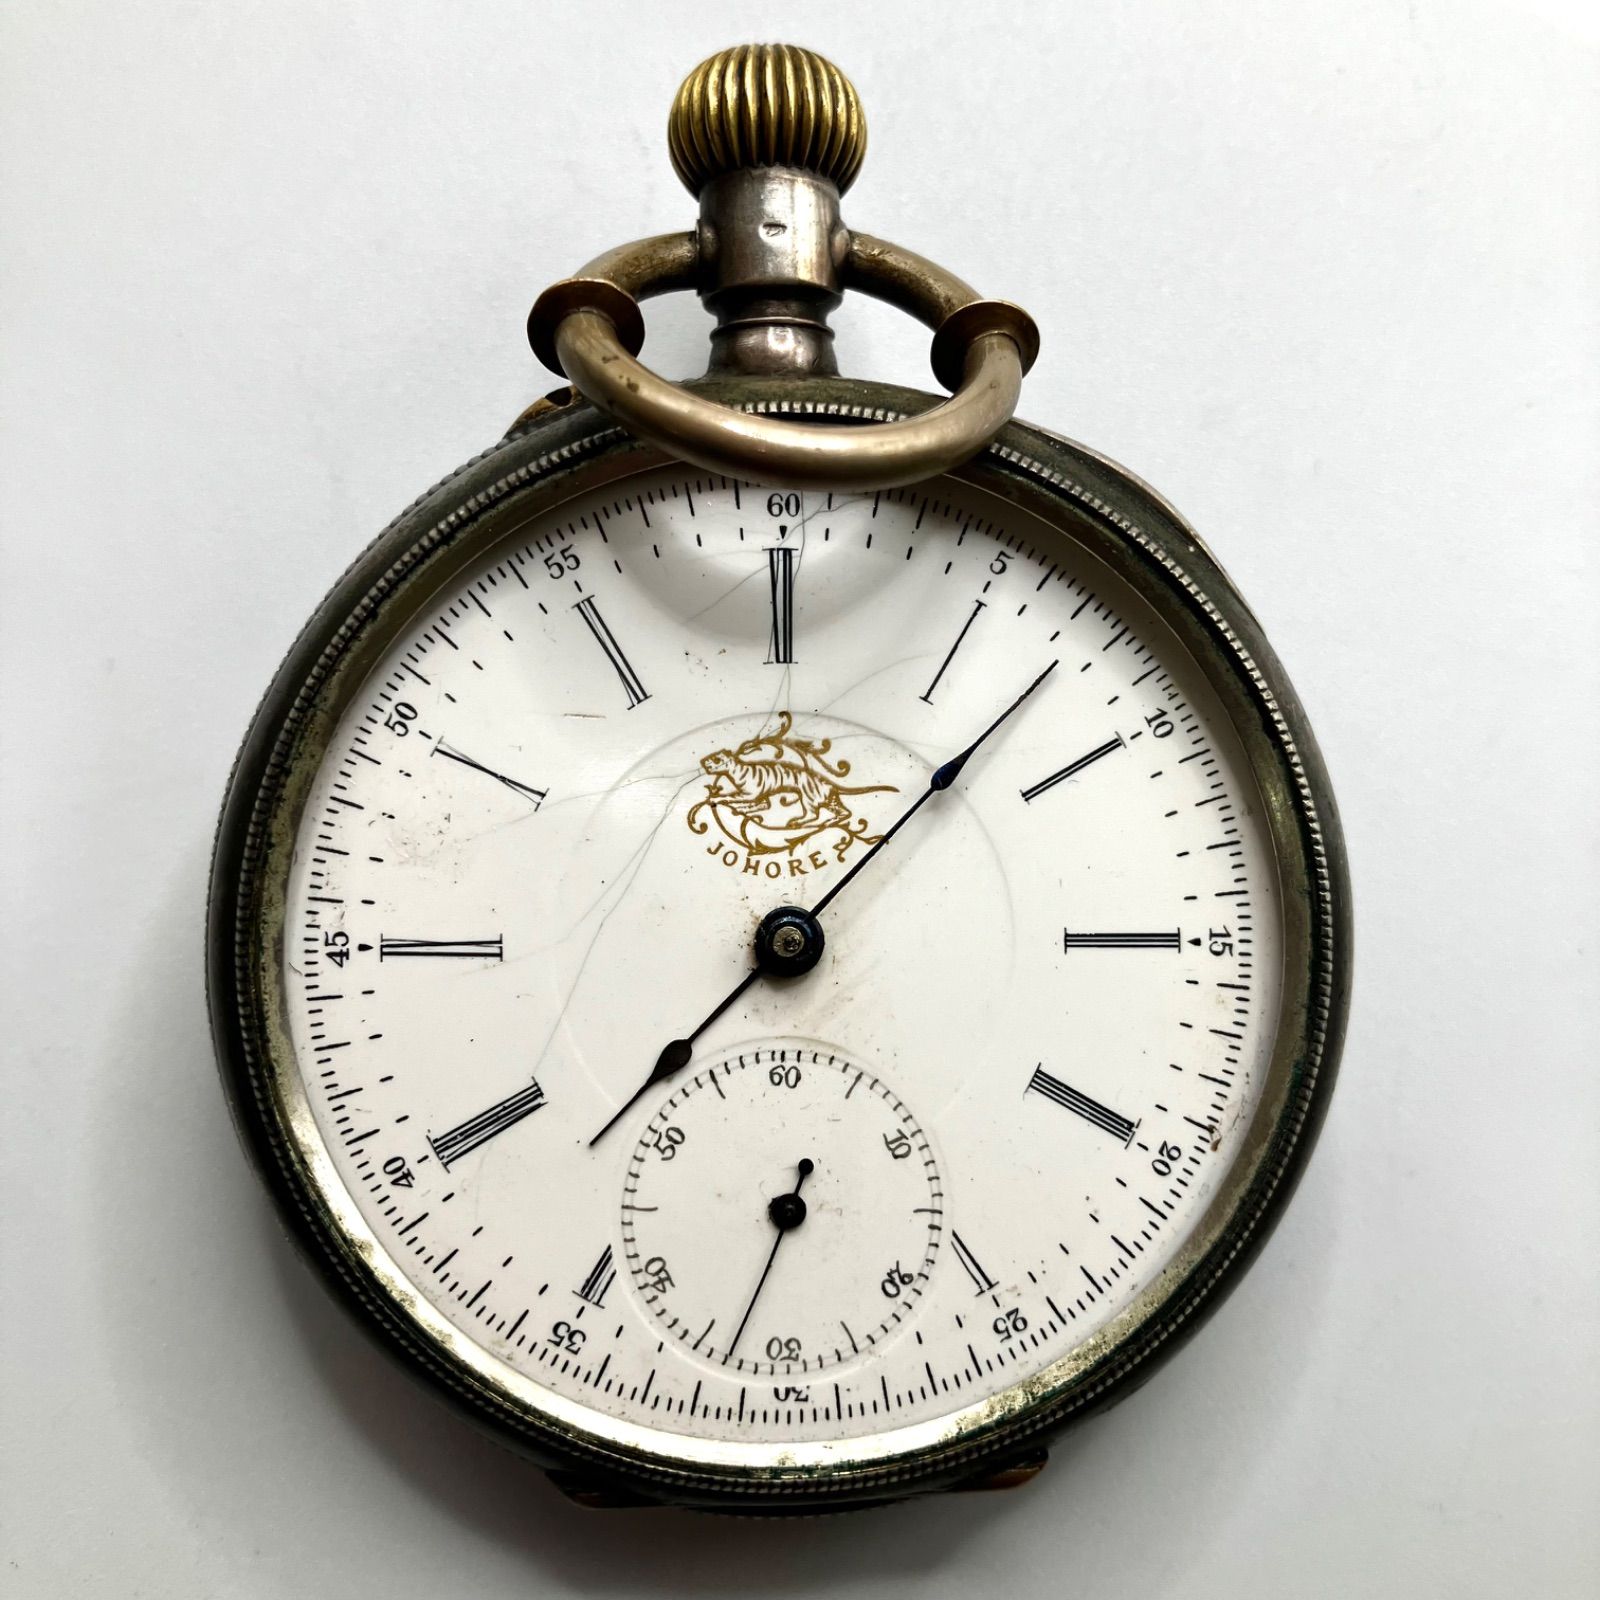 日本代理店正規品 EXPO 2000 懐中時計 クオーツ製 - 時計